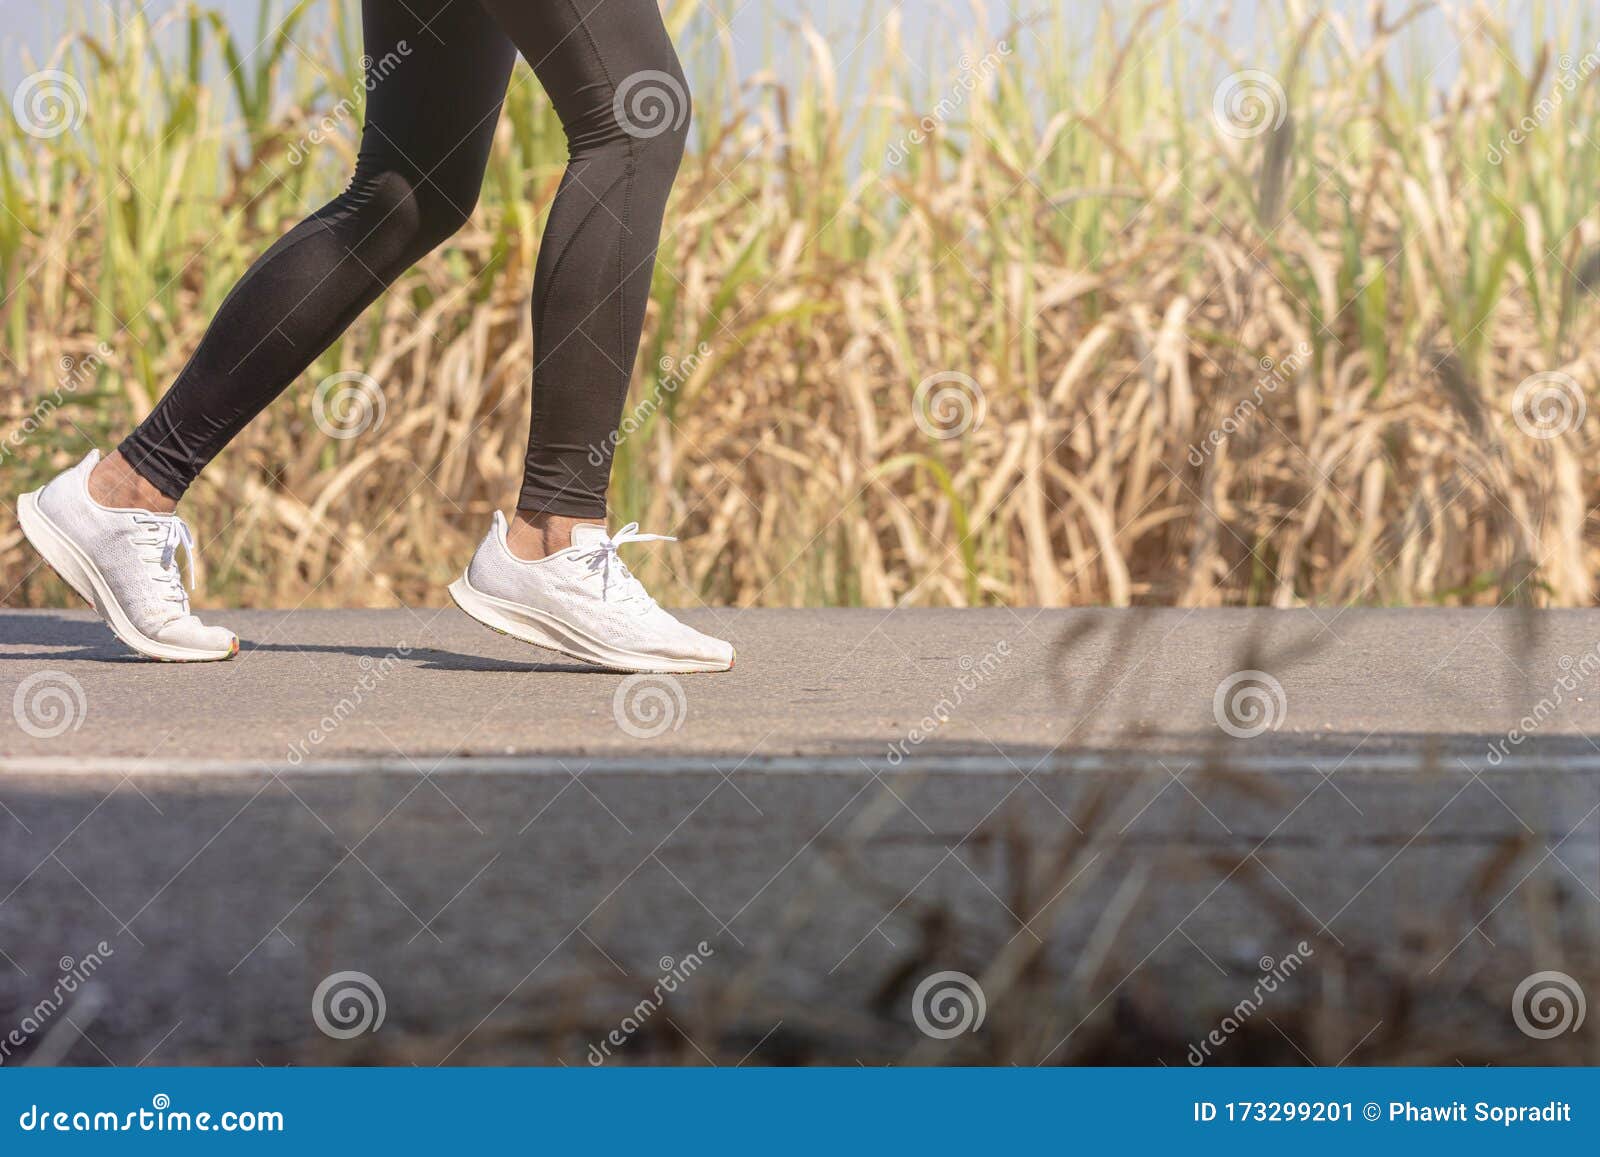 running shoes road runner